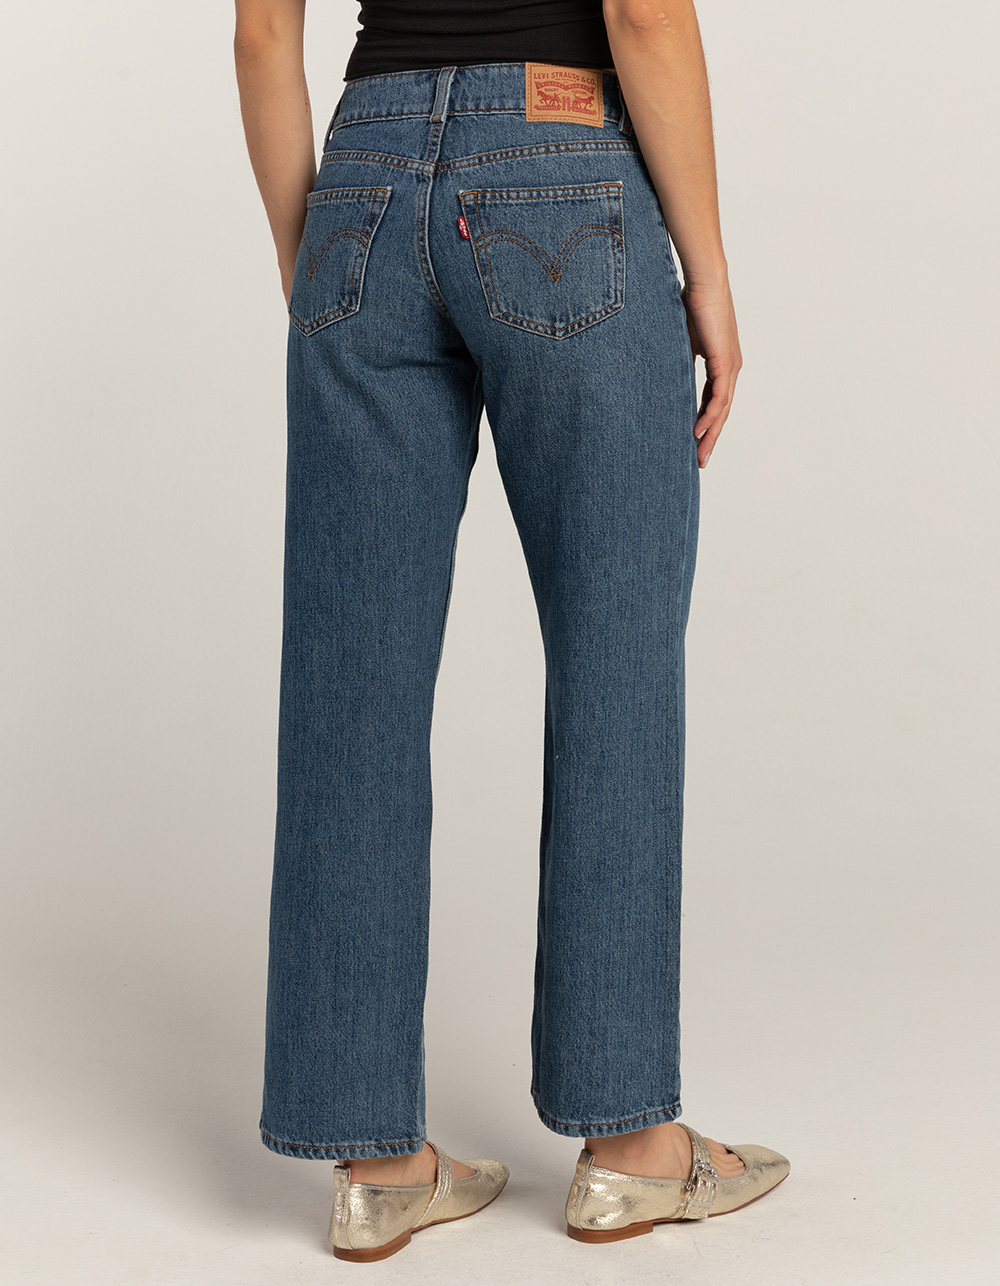 LEVI'S Superlow Loose Womens Jeans - It's A Vibe - VINTAGE MED | Tillys